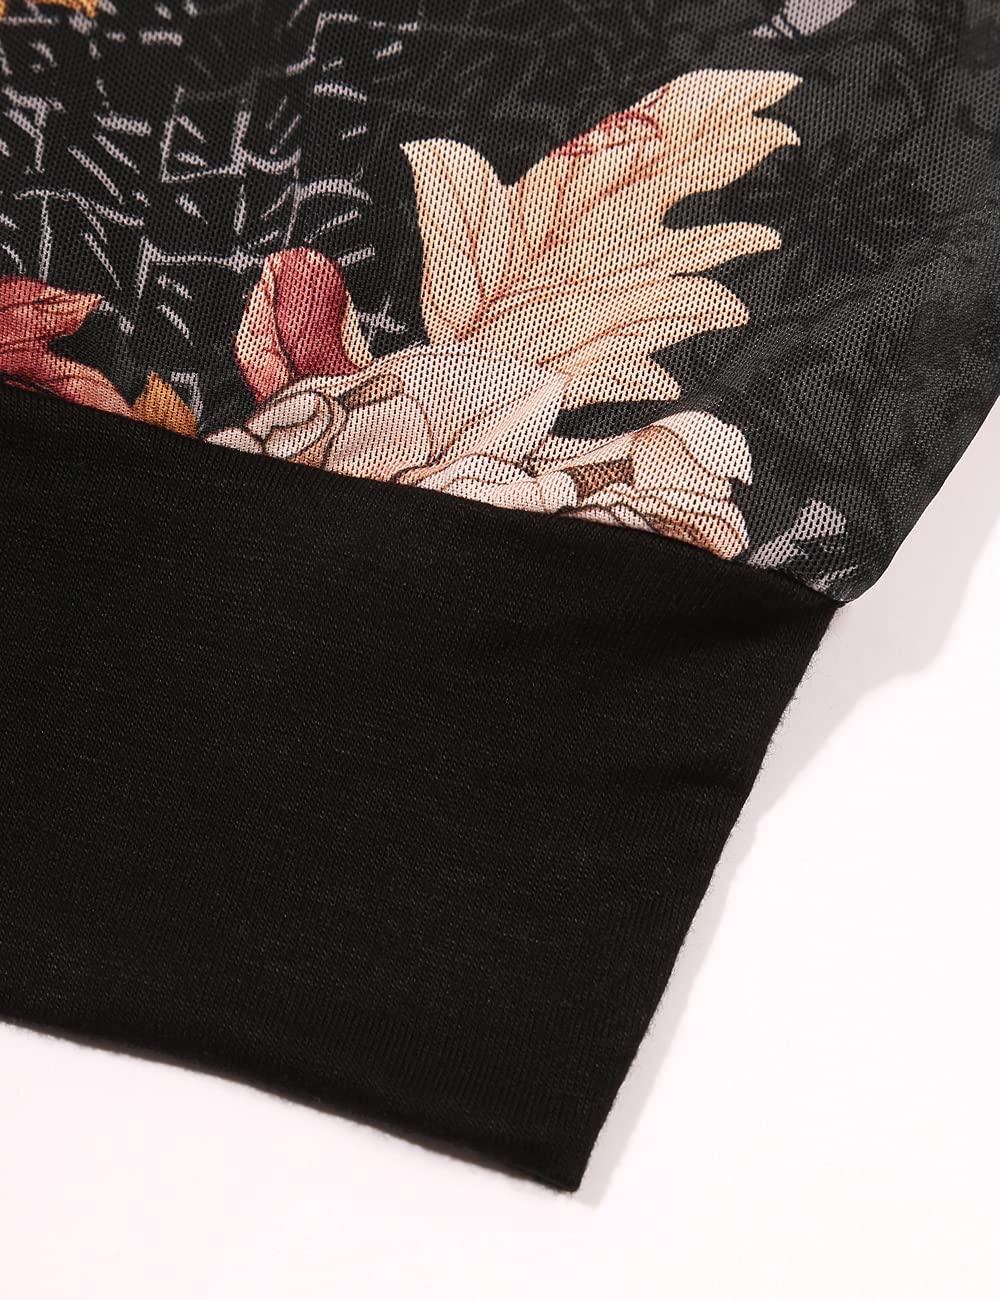 BAISHENGGT Black Peony Flower Women's Printed Flouncing Flared Short Sleeve Mesh Blouse Tops